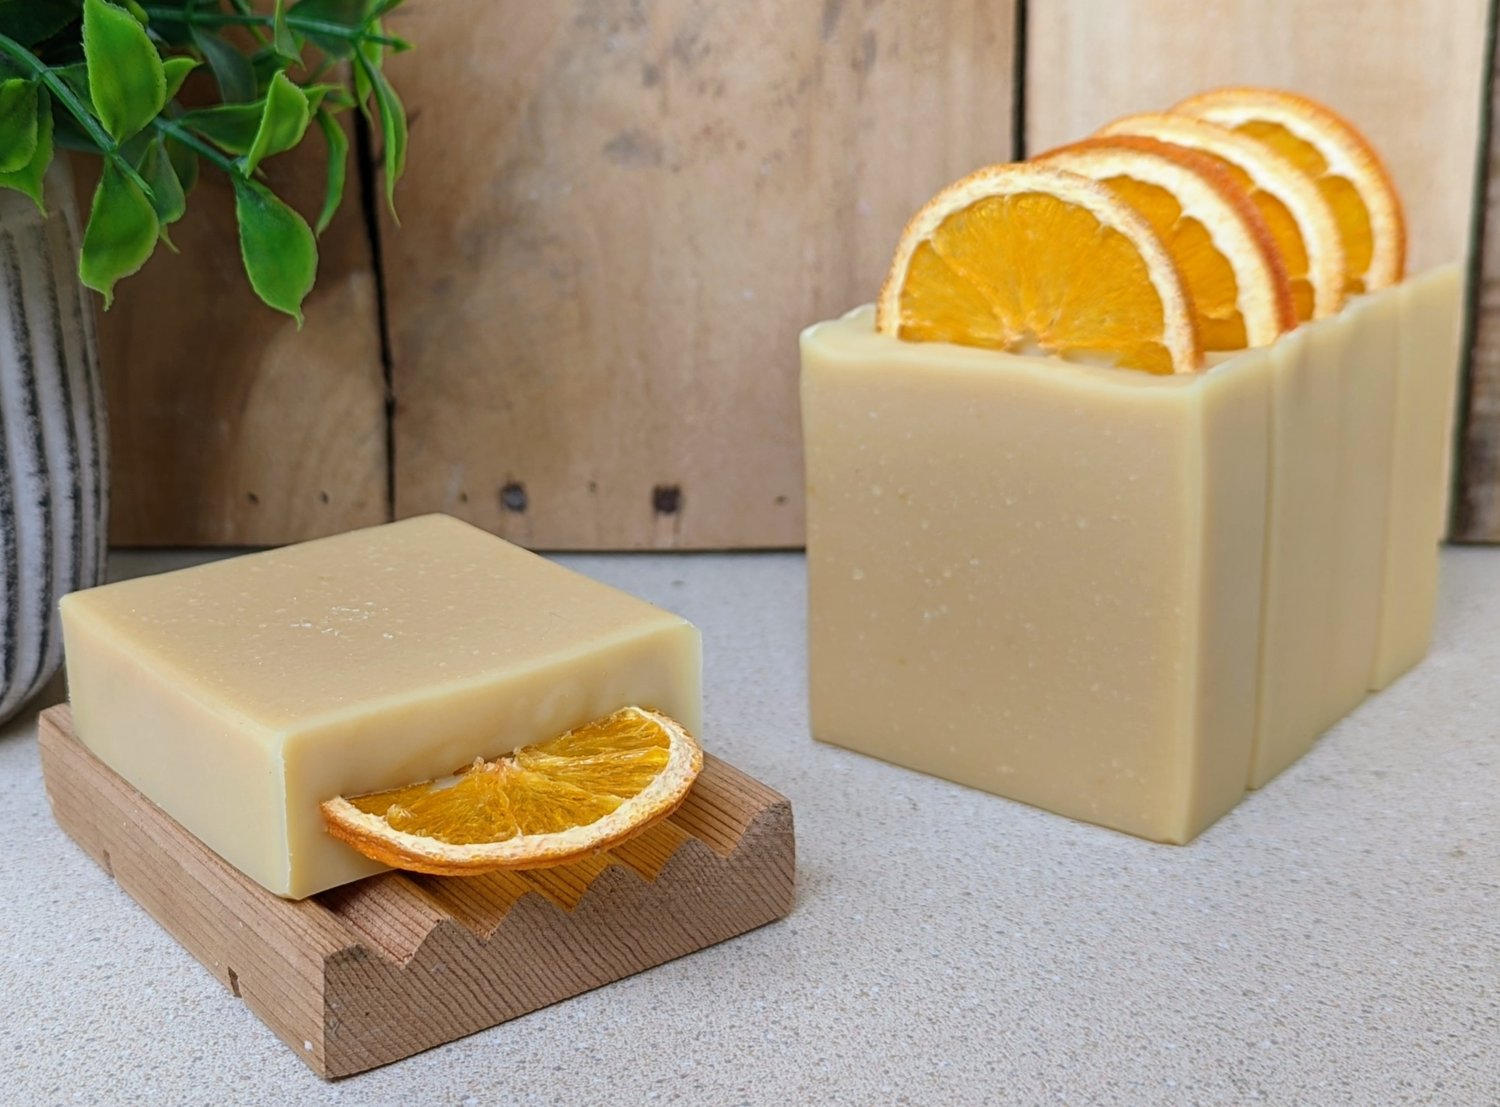 Sunny Citrus Goat Milk Soap — SEEDs for Autism